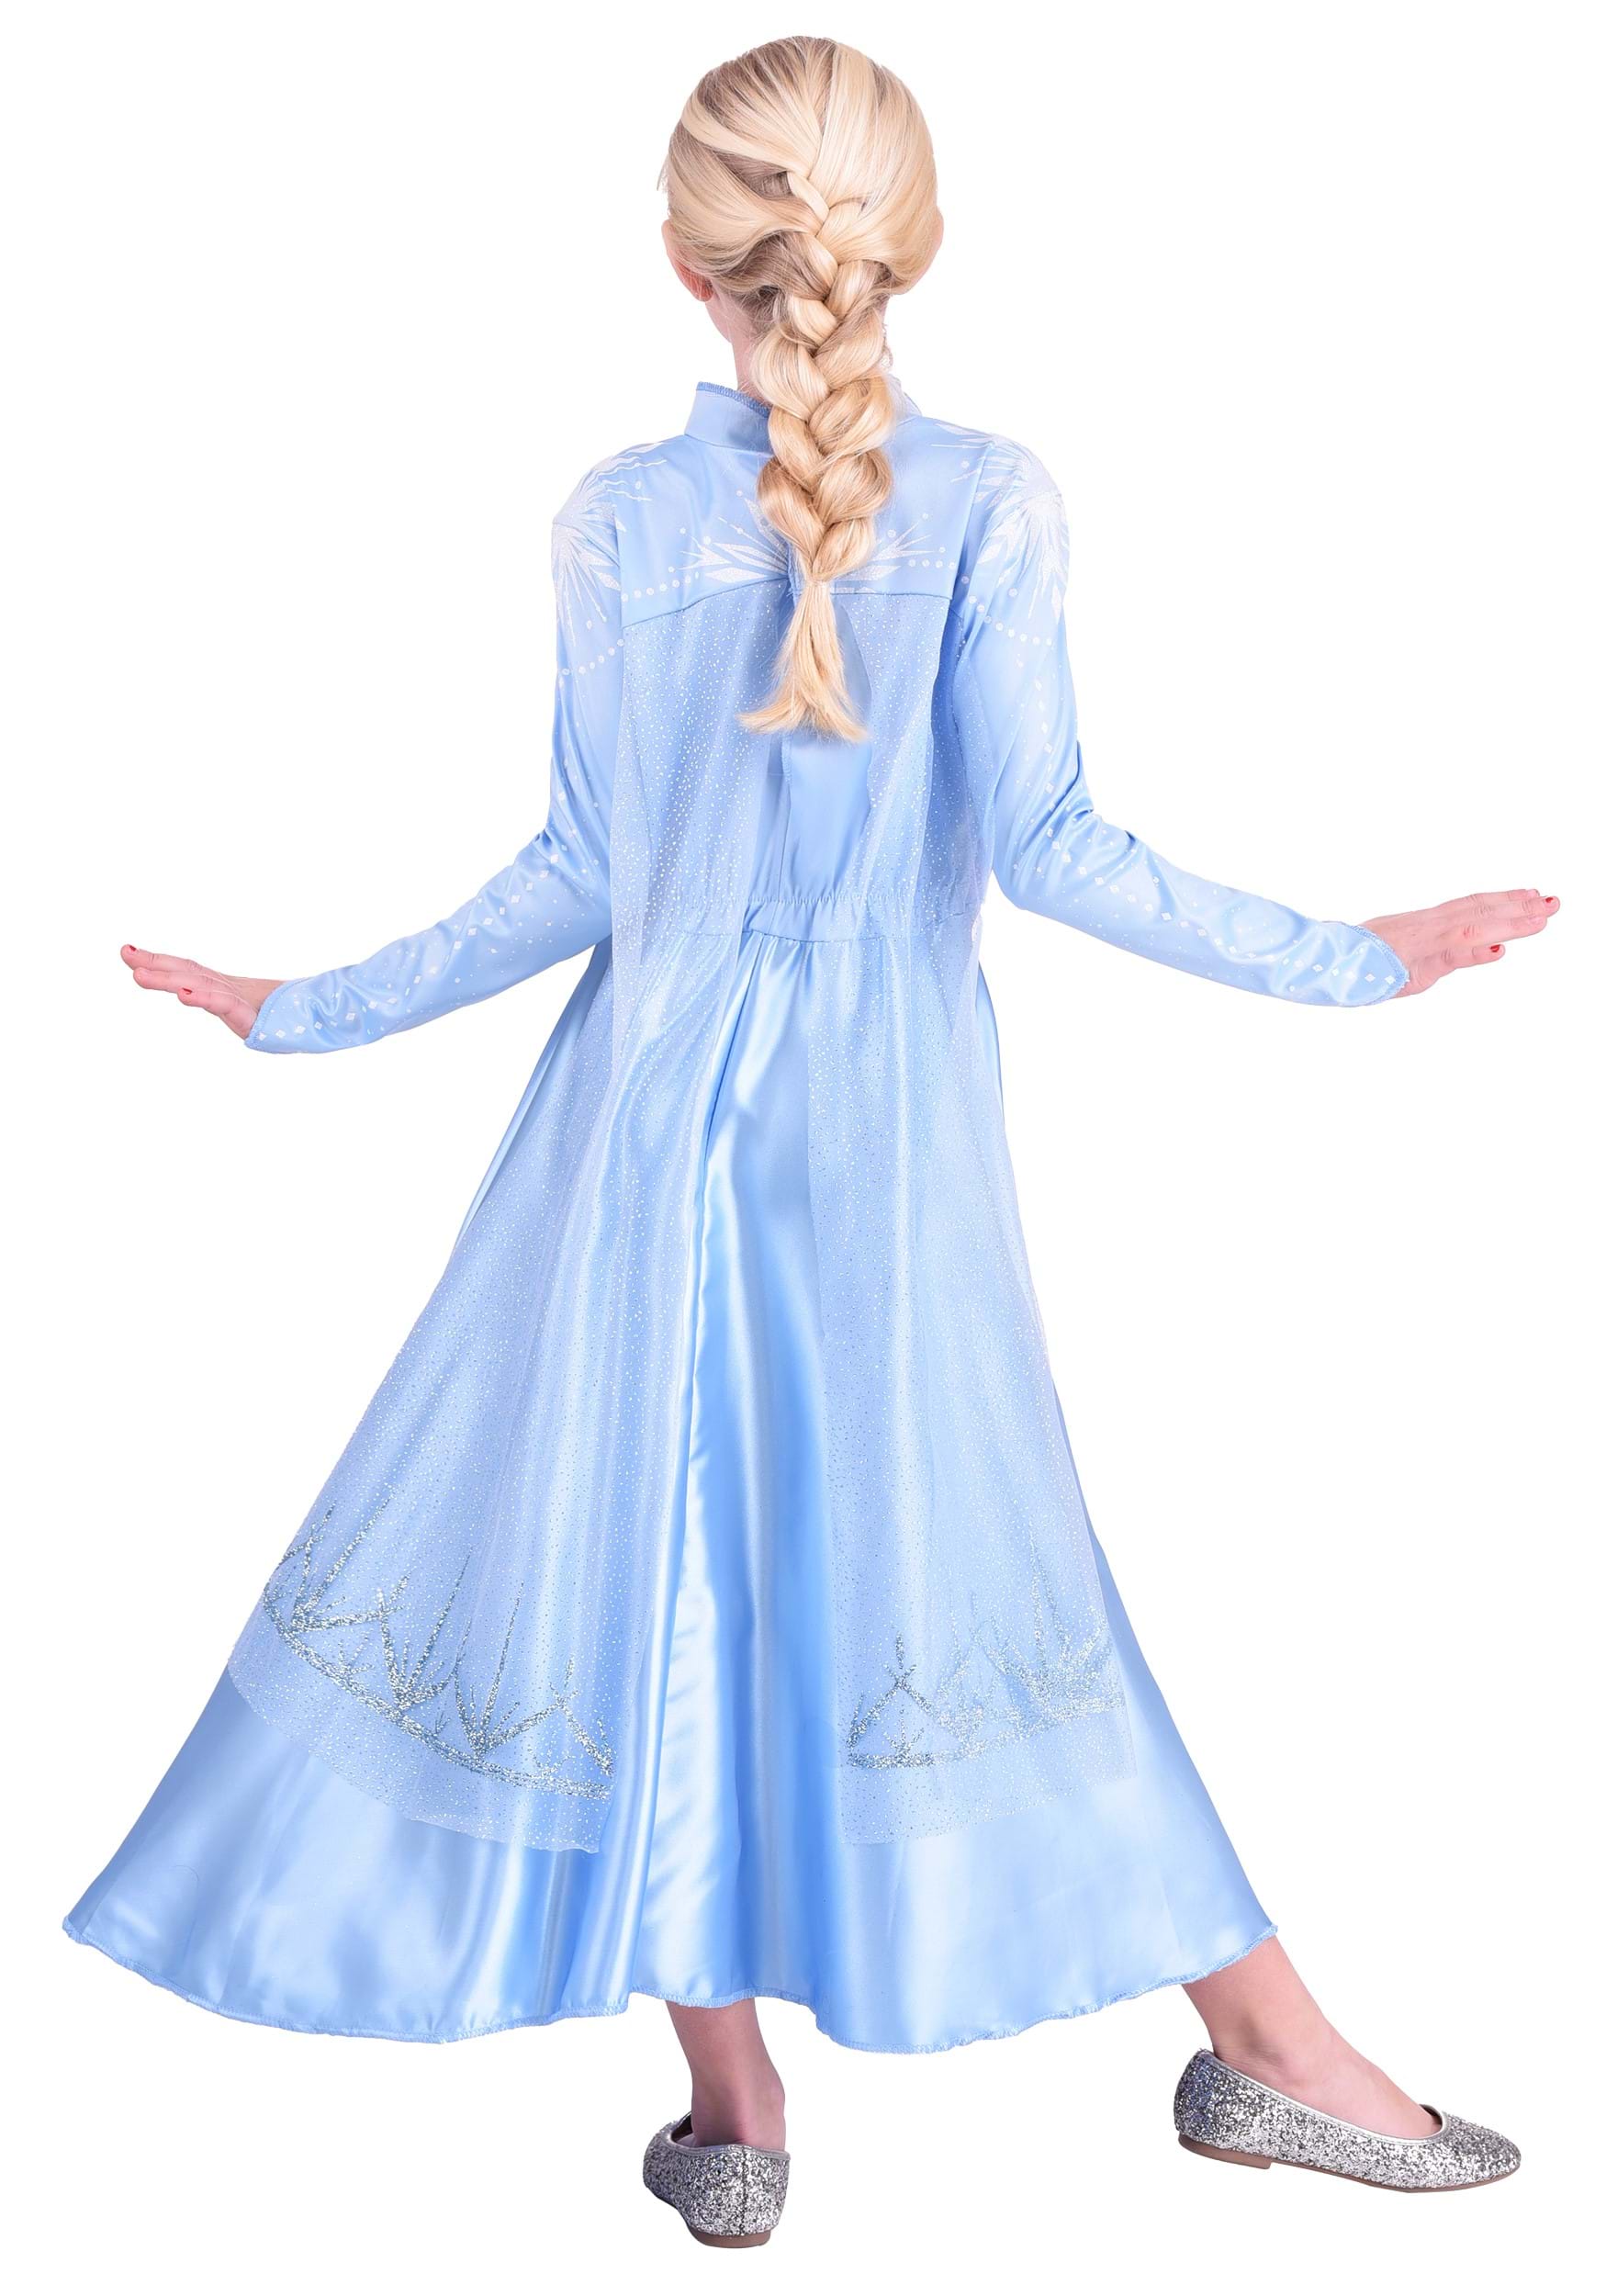 Disney Frozen 2 Elsa Deluxe Costume For Girls